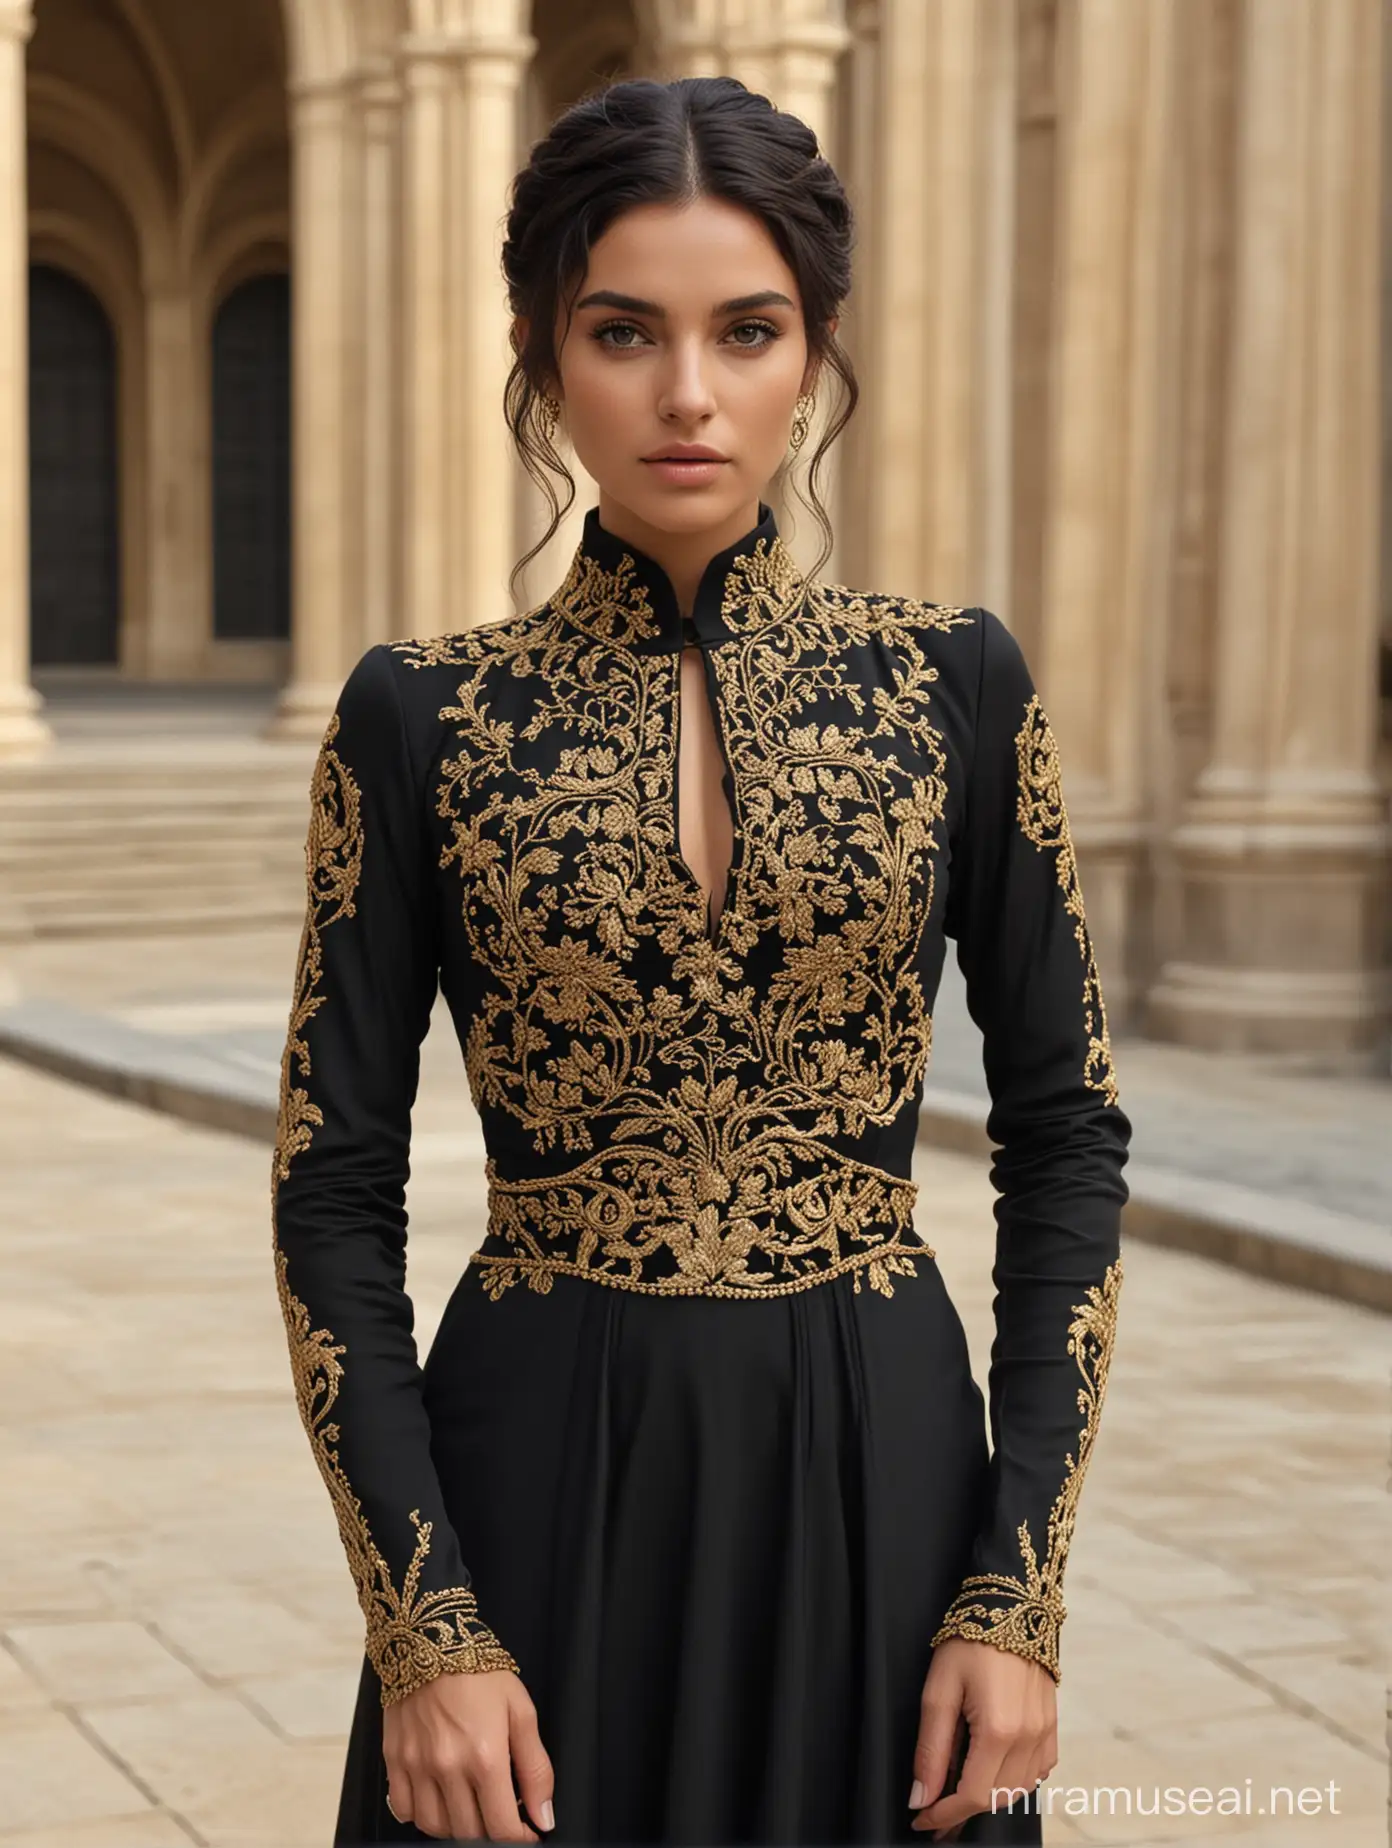 23 yo italian-australian female, black valyrian style hair,cured skin,midriff long sleeve black imperial gown with gold detail